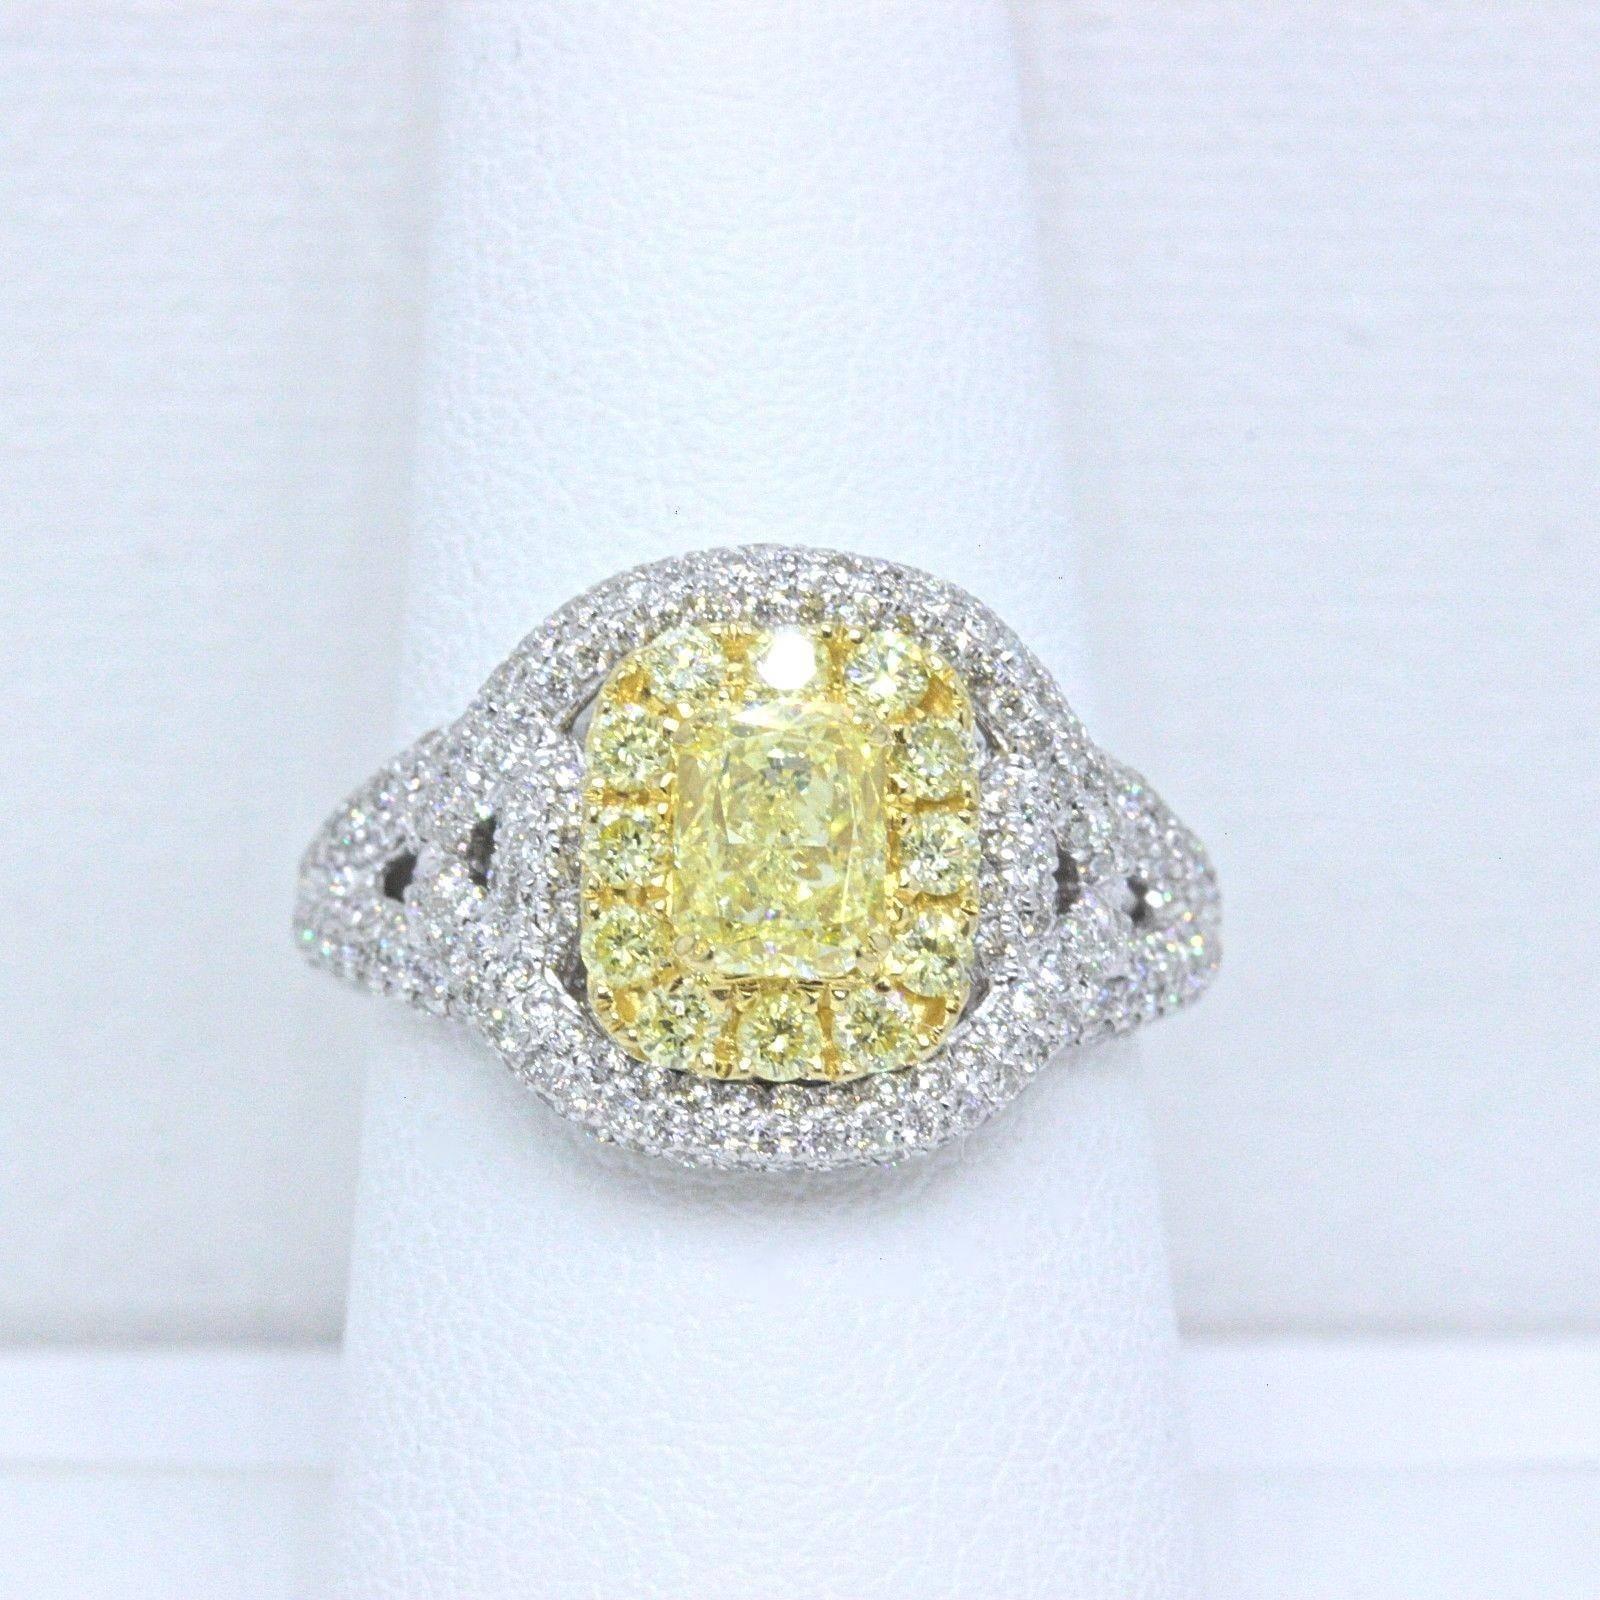 Women's Fancy Intense Yellow 2.33 Carat Diamond Engagement Ring in Platinum with GIA